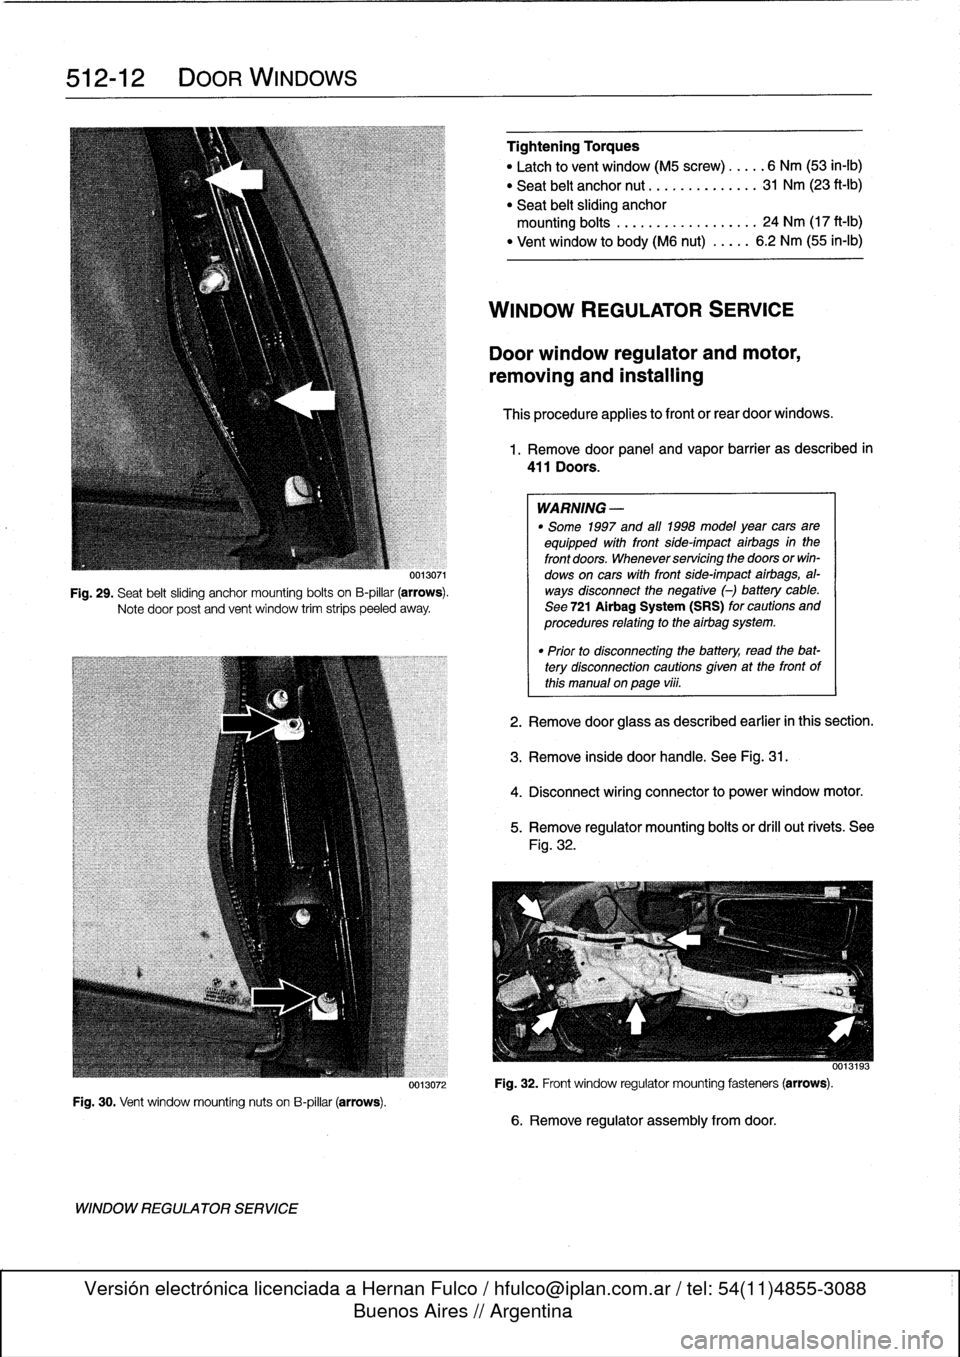 BMW M3 1993 E36 Owners Guide 
512-
1
2

	

DOOR
WINDOWS

Fig
.
30
.
Vent
window
mounting
nuts
on
B-pillar
(arrows)
.

WINDOW
REGULATOR
SERVICE

0013071

Fig
.
29
.
Seat
belt
sliding
anchor
mounting
bolts
on
B-pillar
(arrows)
.

N